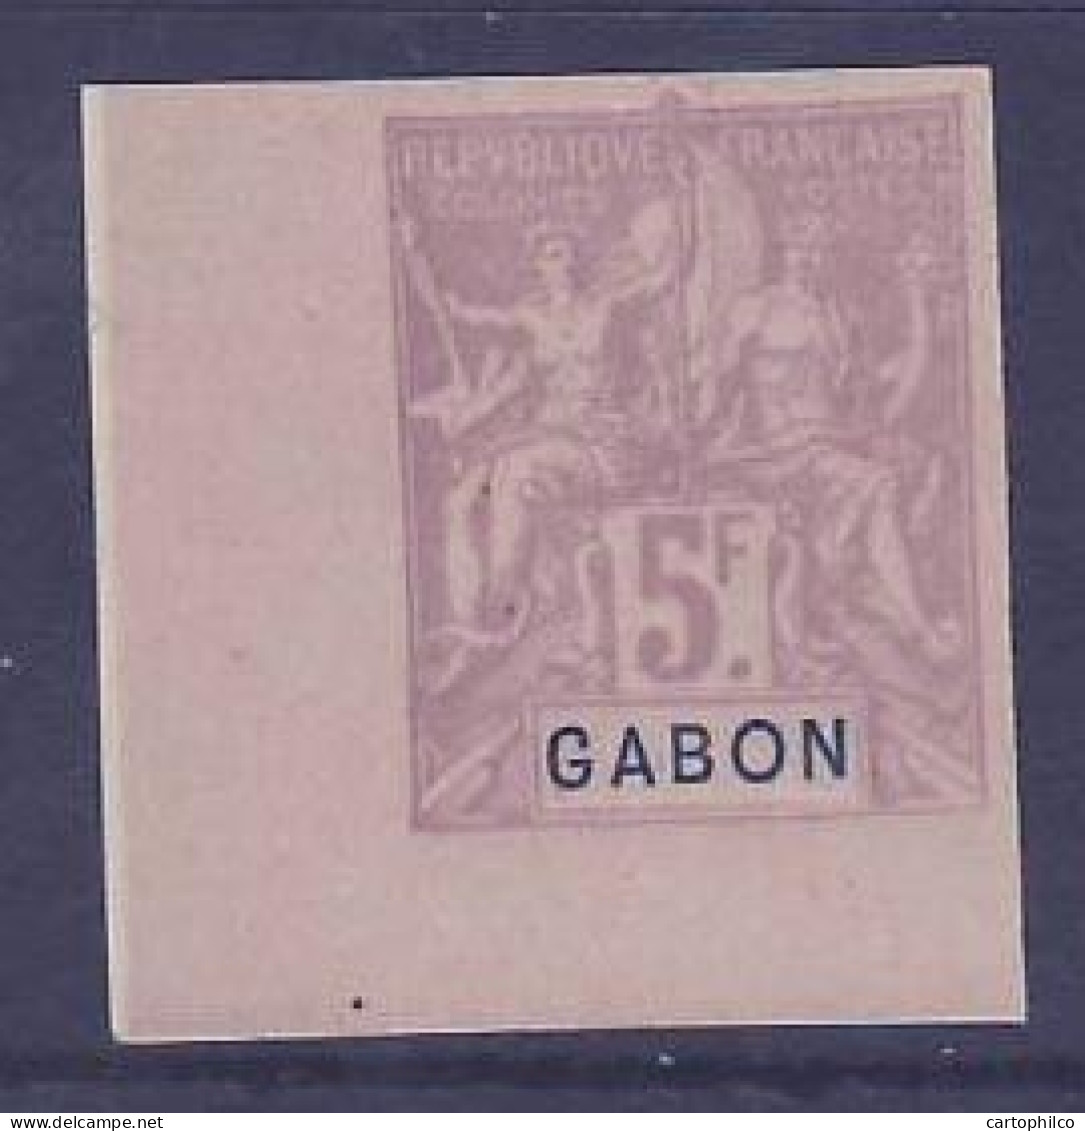 Gabon 5f Non Dentele Coin De Feuille SUP - Unused Stamps